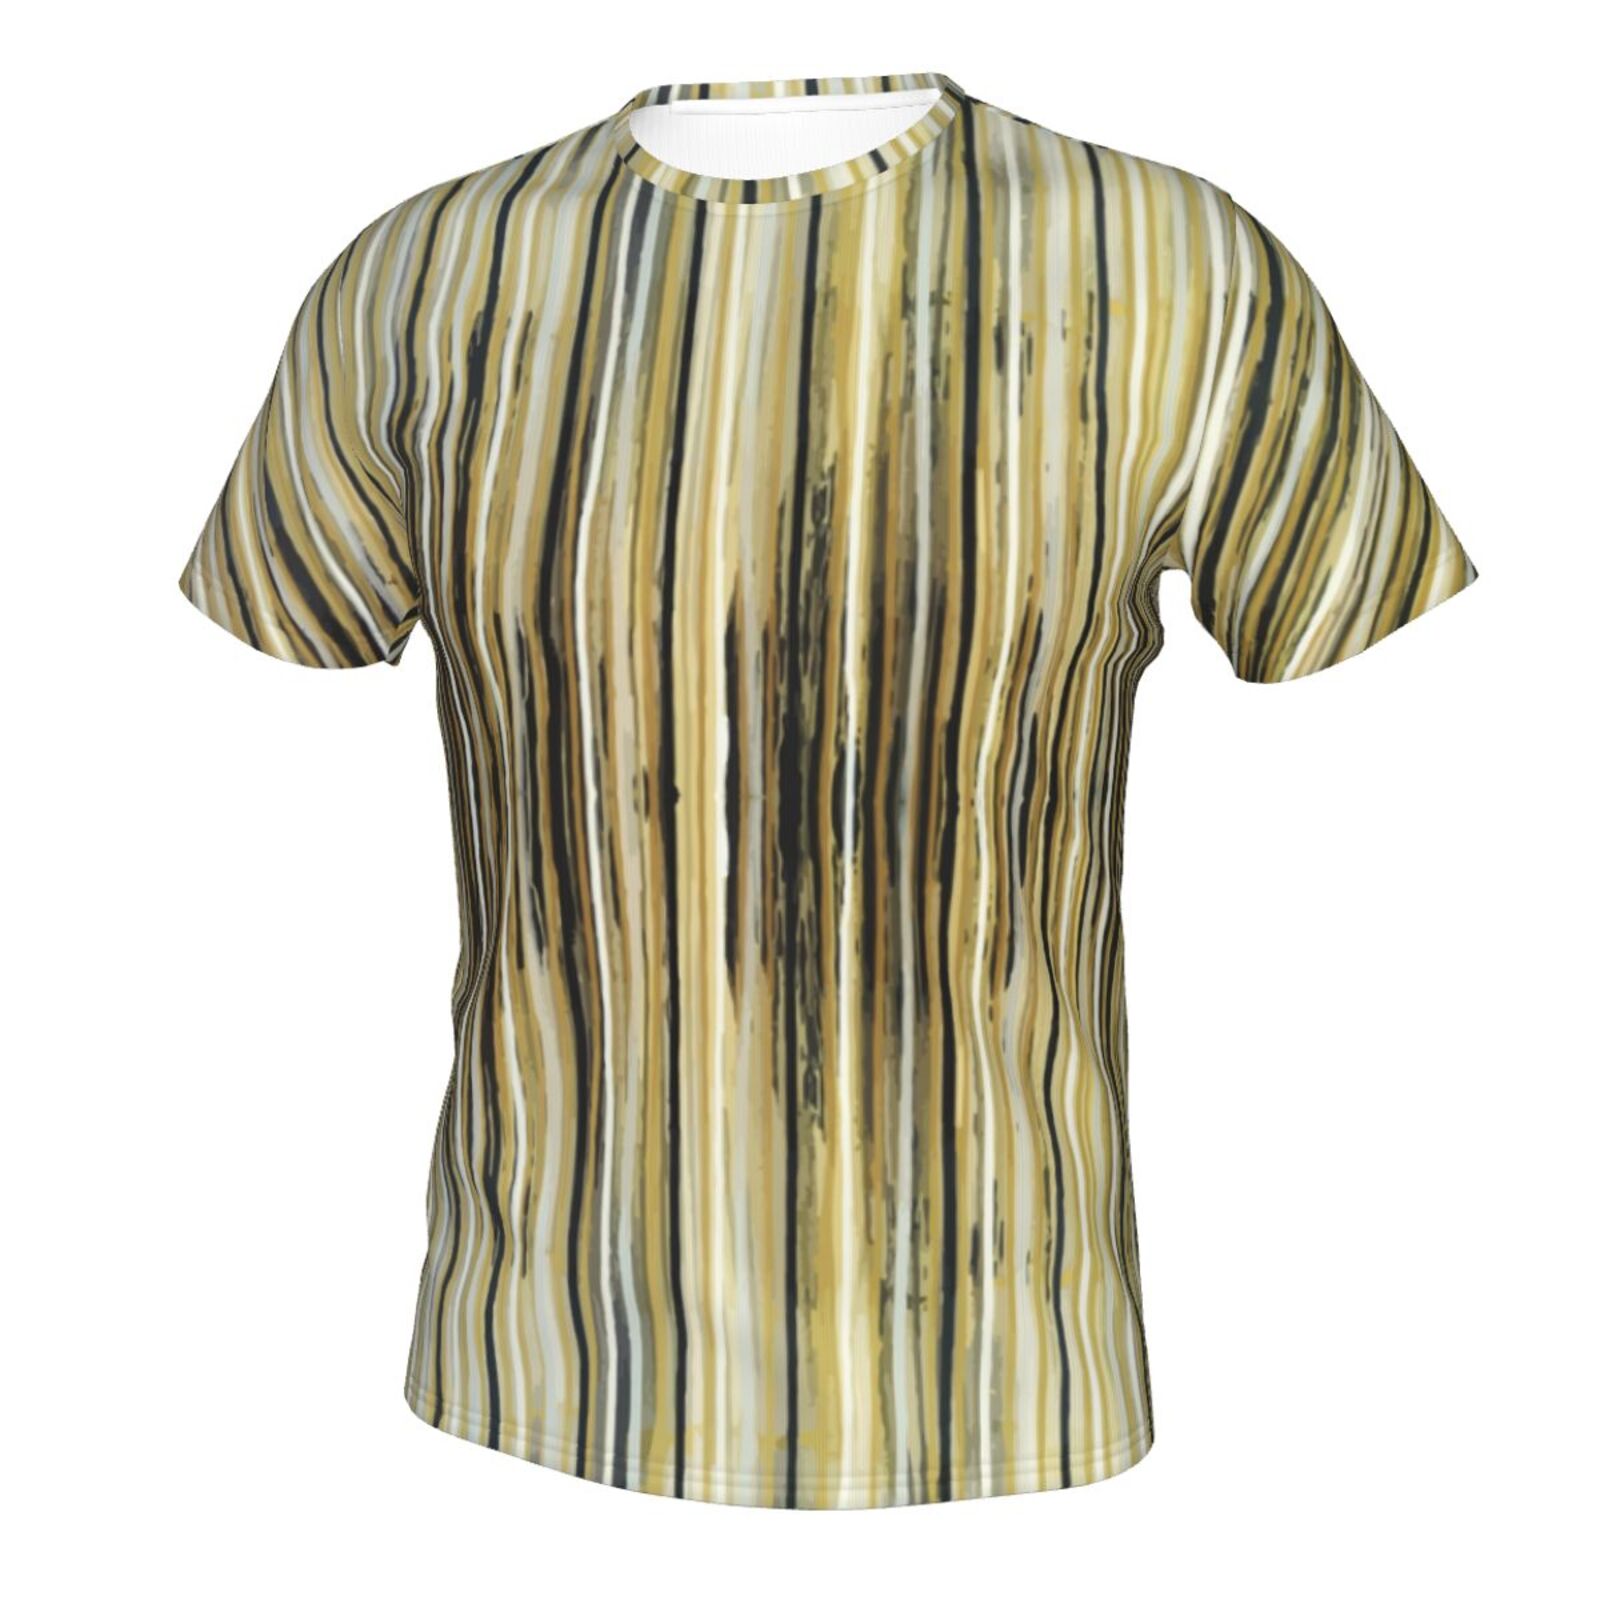 A Crush On Stripes Malerei Elemente Klassisch Schweiz T-shirt